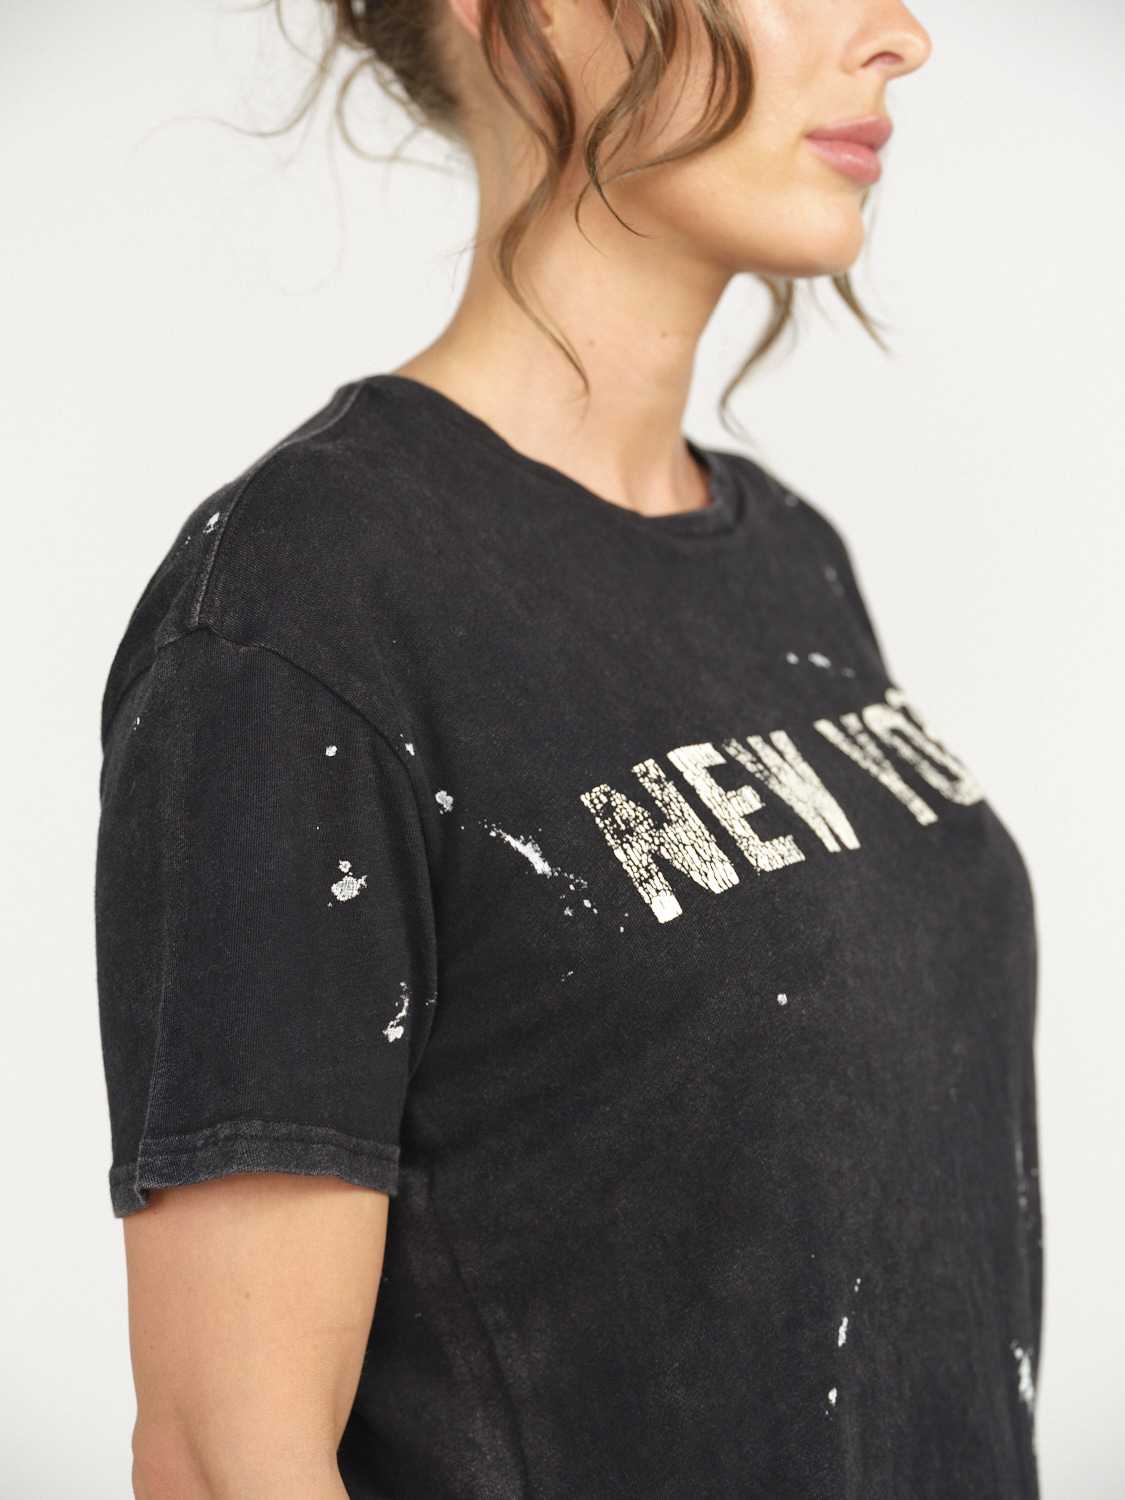 R13 New York Boy T-Shirt  - Splatter Shirt aus Baumwolle  schwarz XS